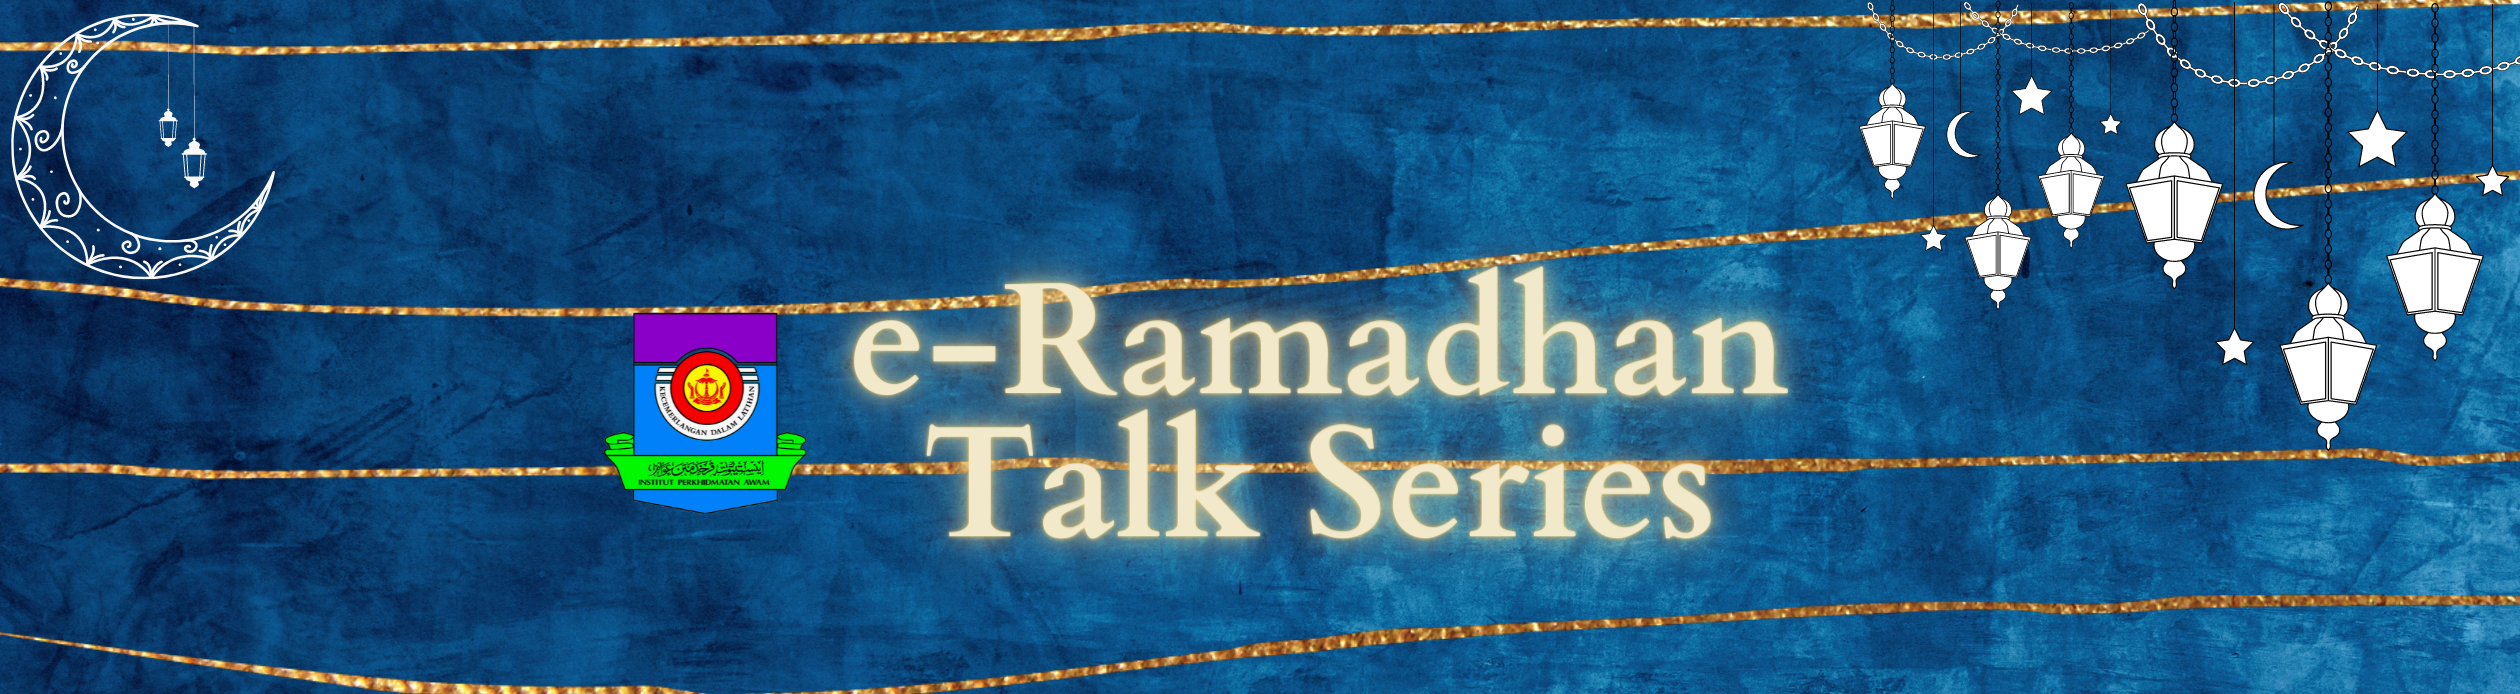 e-Ramadhan Talk Series Banner.png